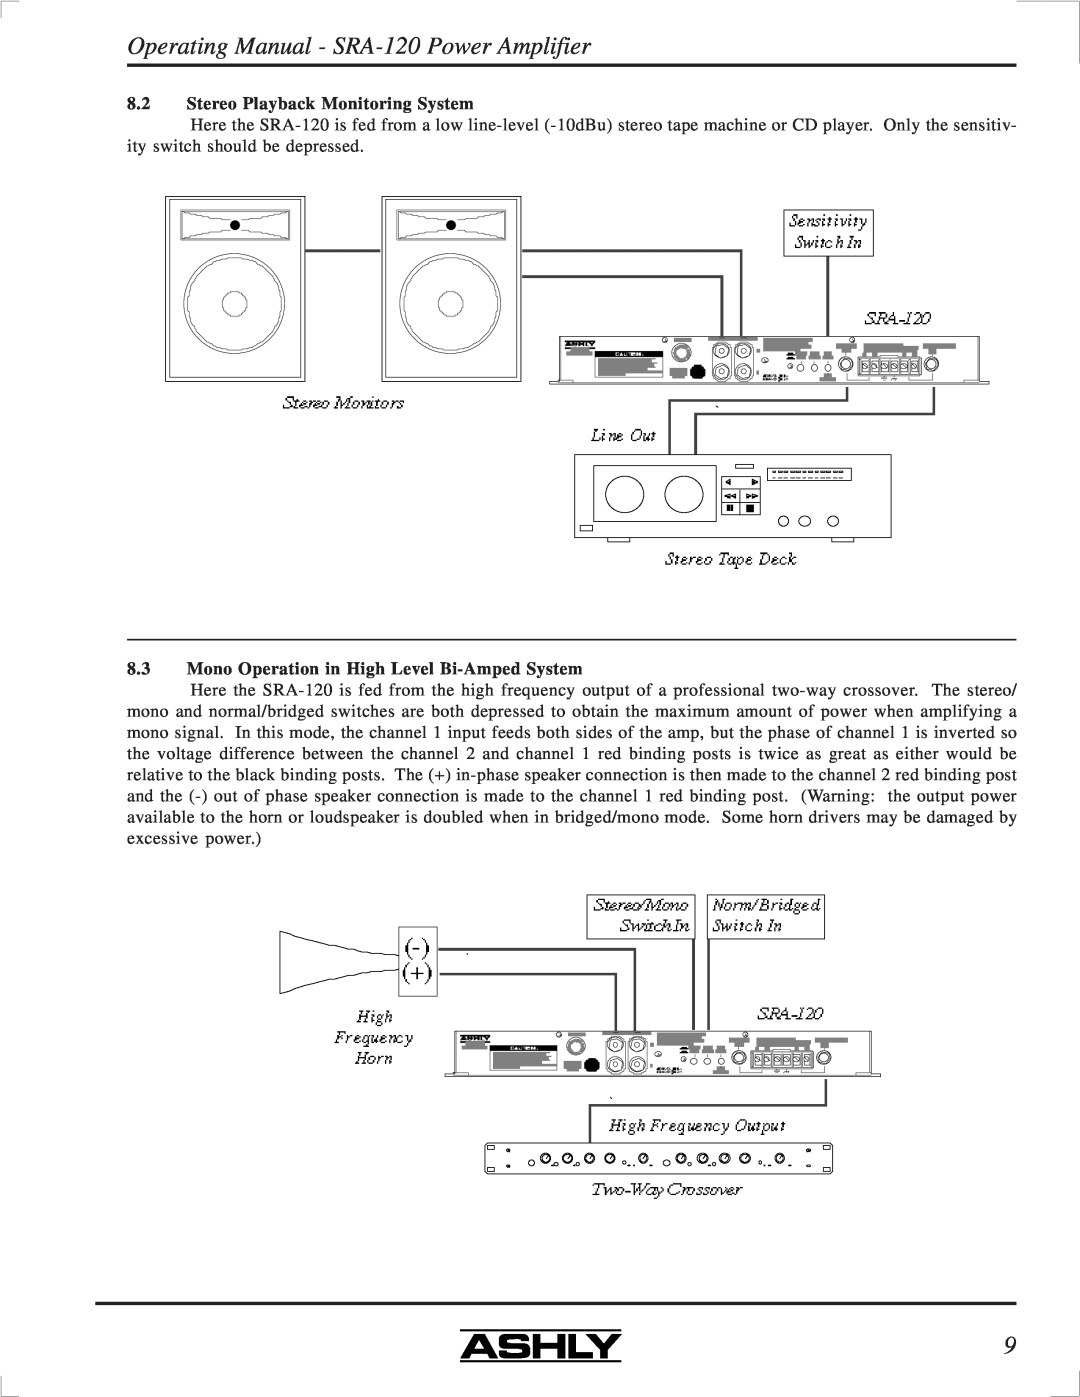 Ashly manual Operating Manual - SRA-120Power Amplifier, 8.2Stereo Playback Monitoring System 